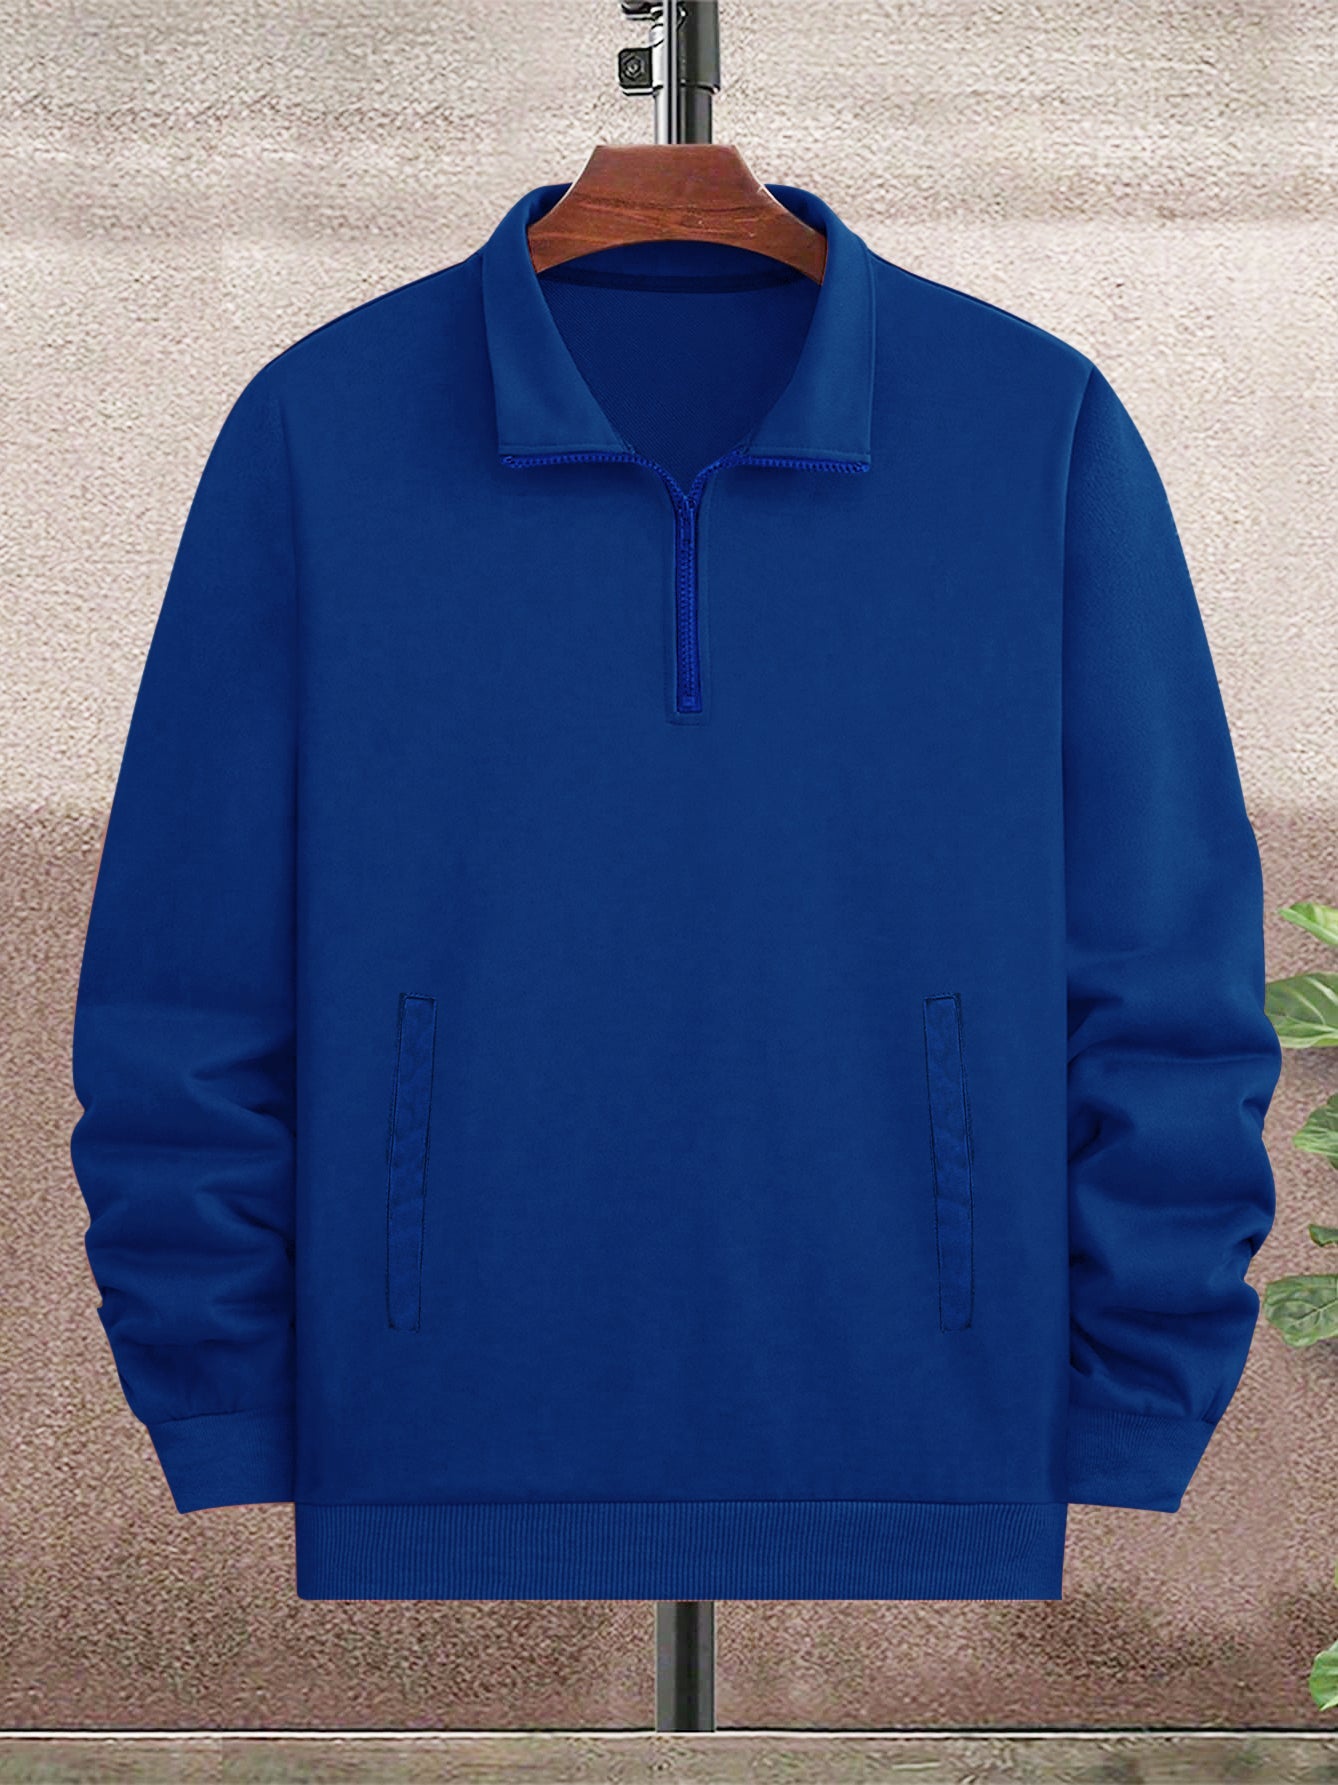 PPR Fleece Stylish 1/4 Zipper Mock Neck For Men-Dark Blue-BE251